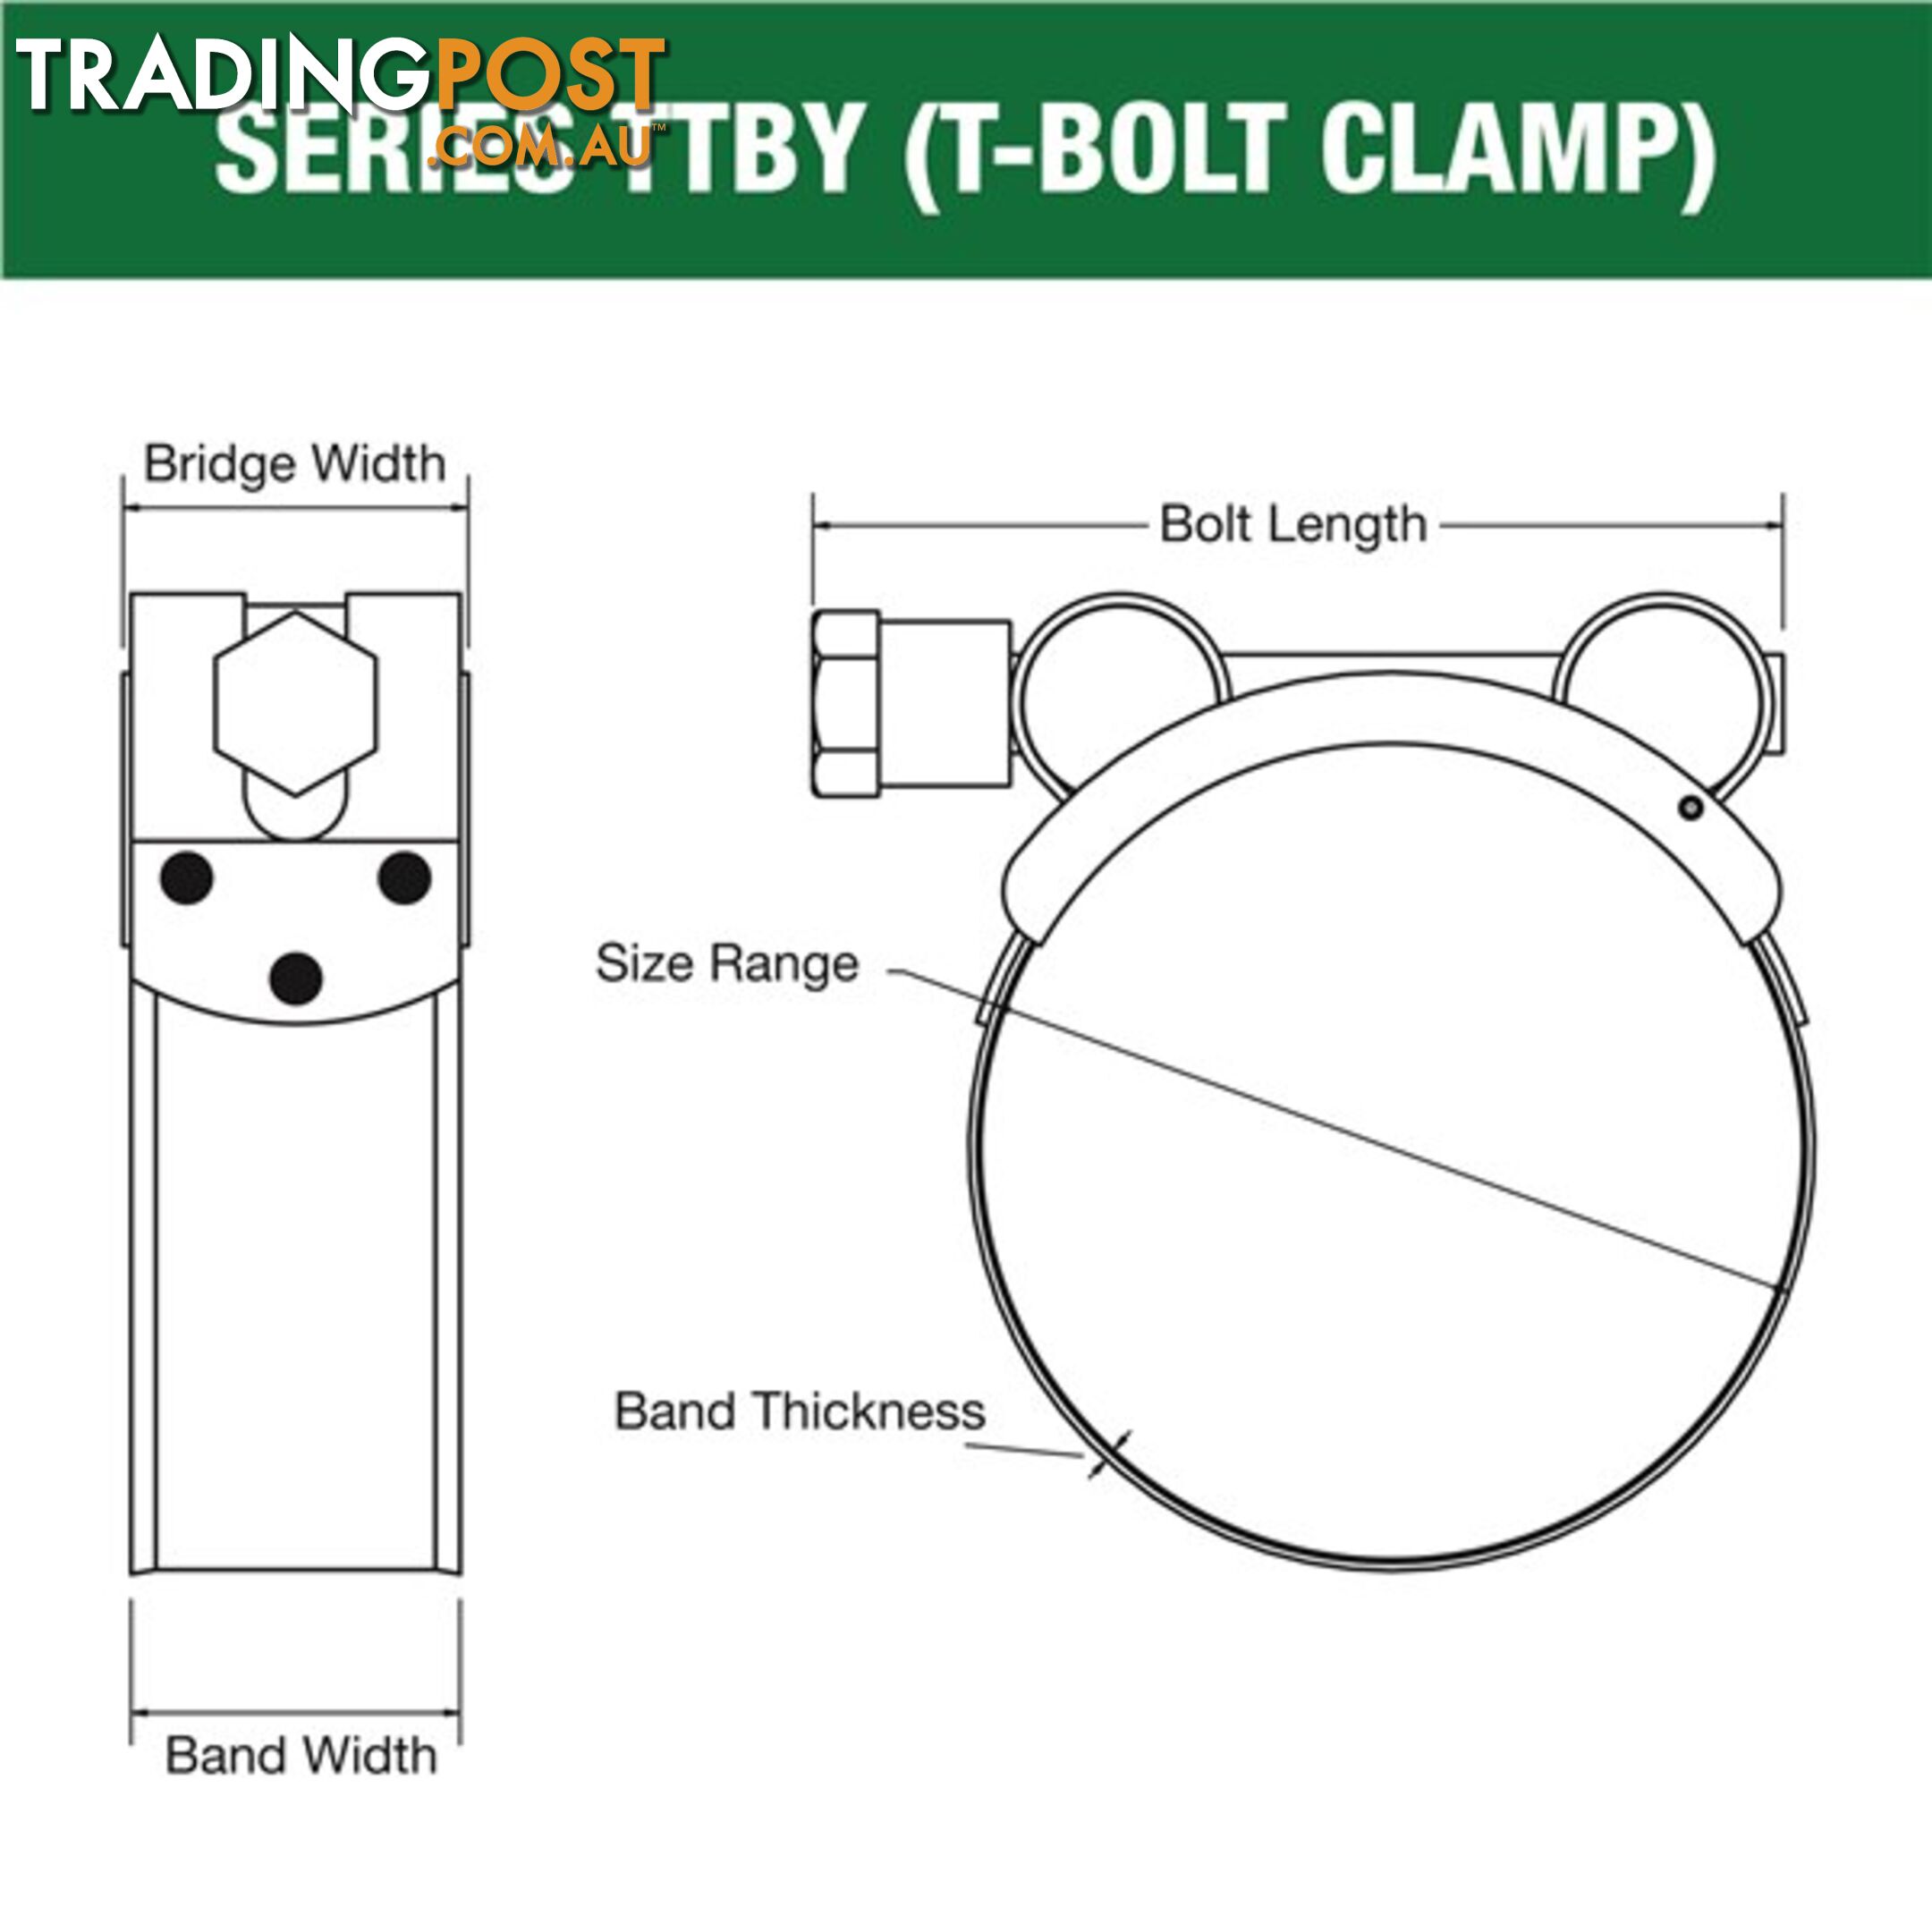 Tridon T-Bolt Hose Clamp 86mm â 91mm Part Stainless Solid Band 10pk SKU - TTBY86-91P